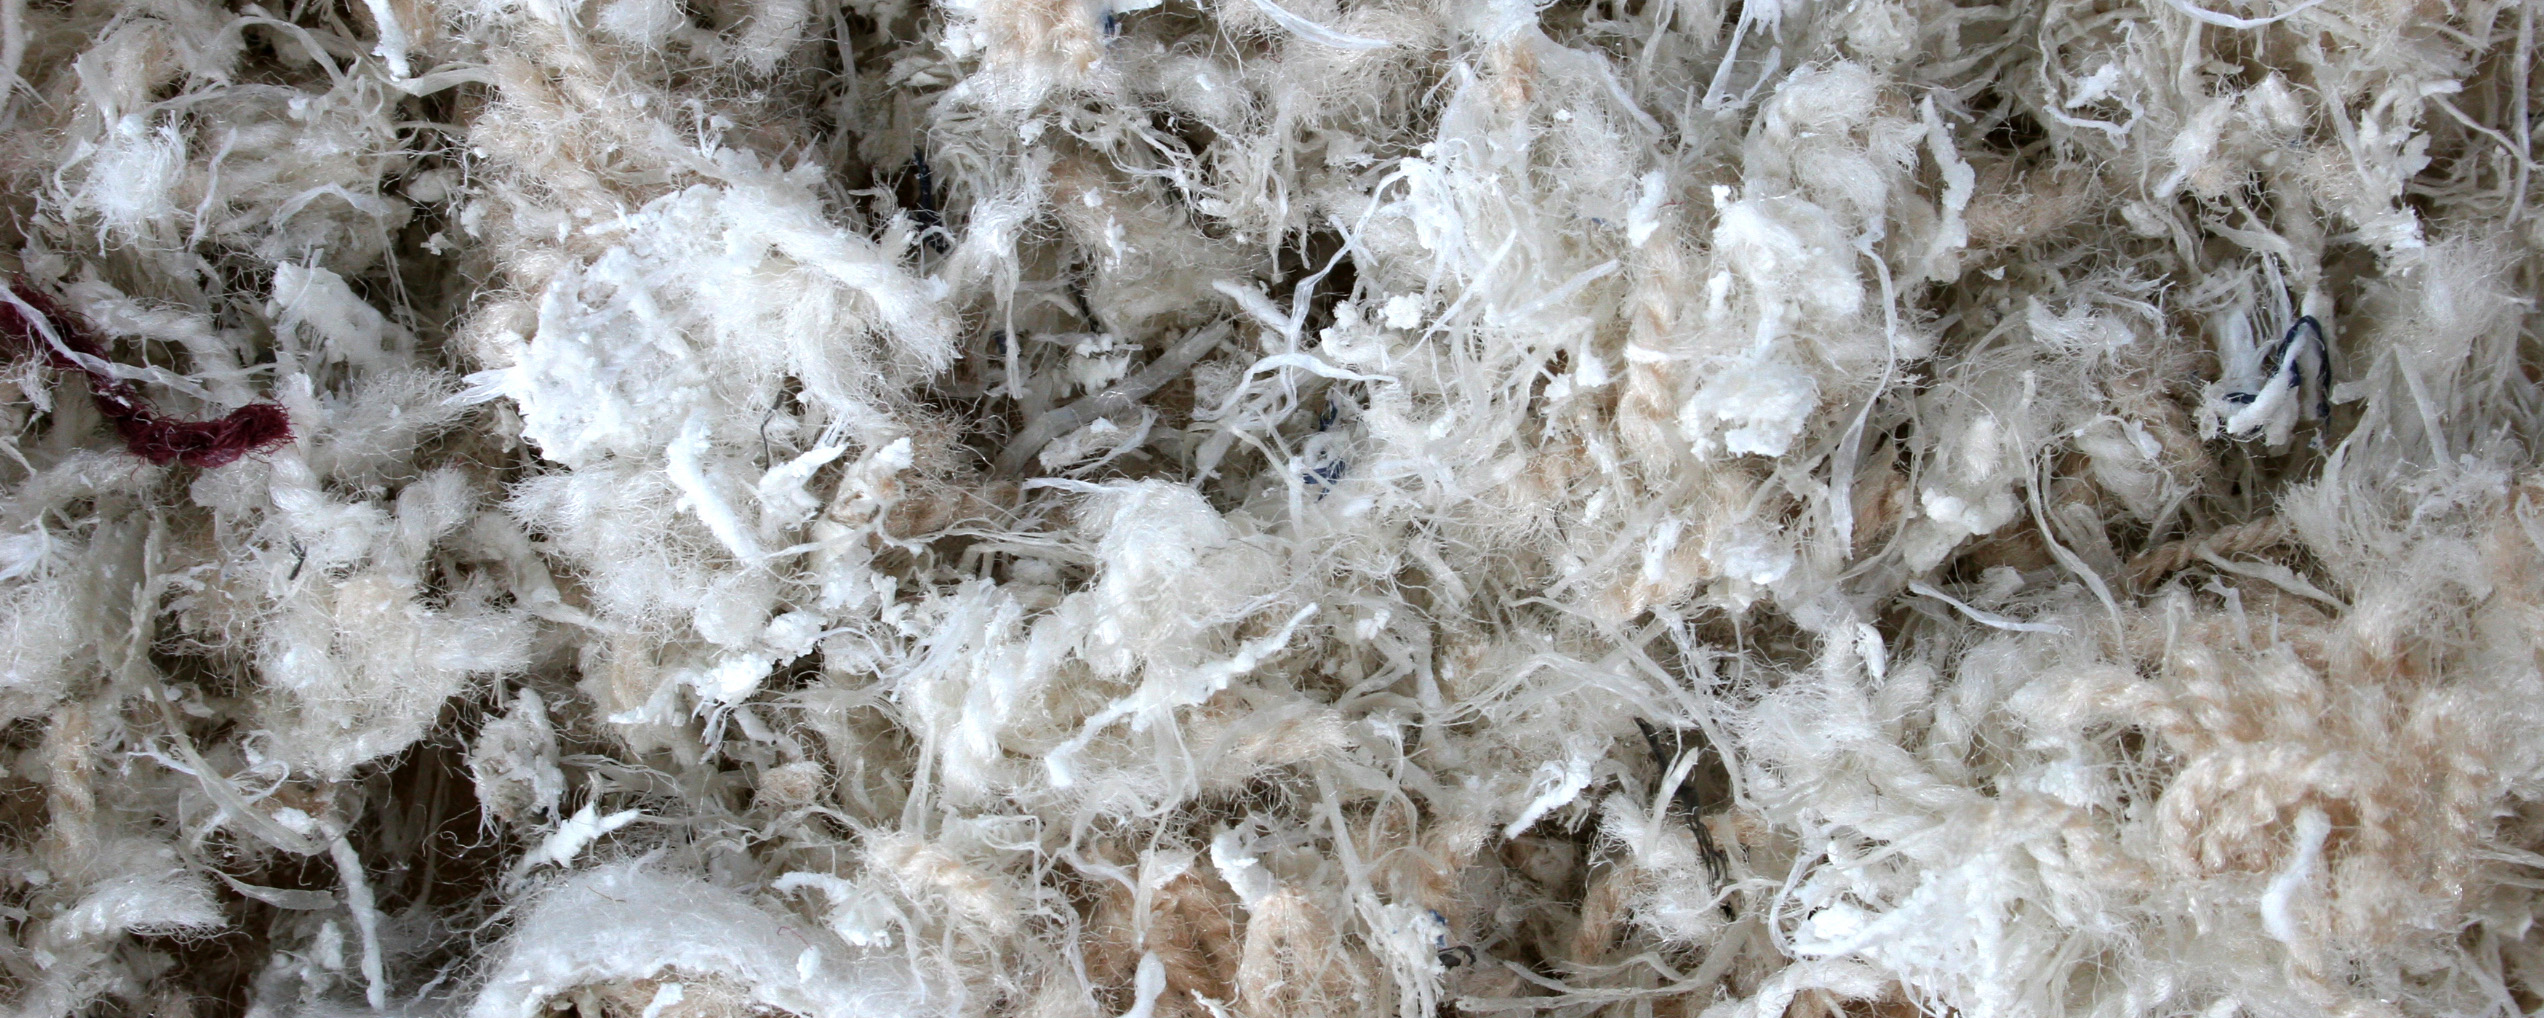 Closeup of shredded carpet scraps for recycling